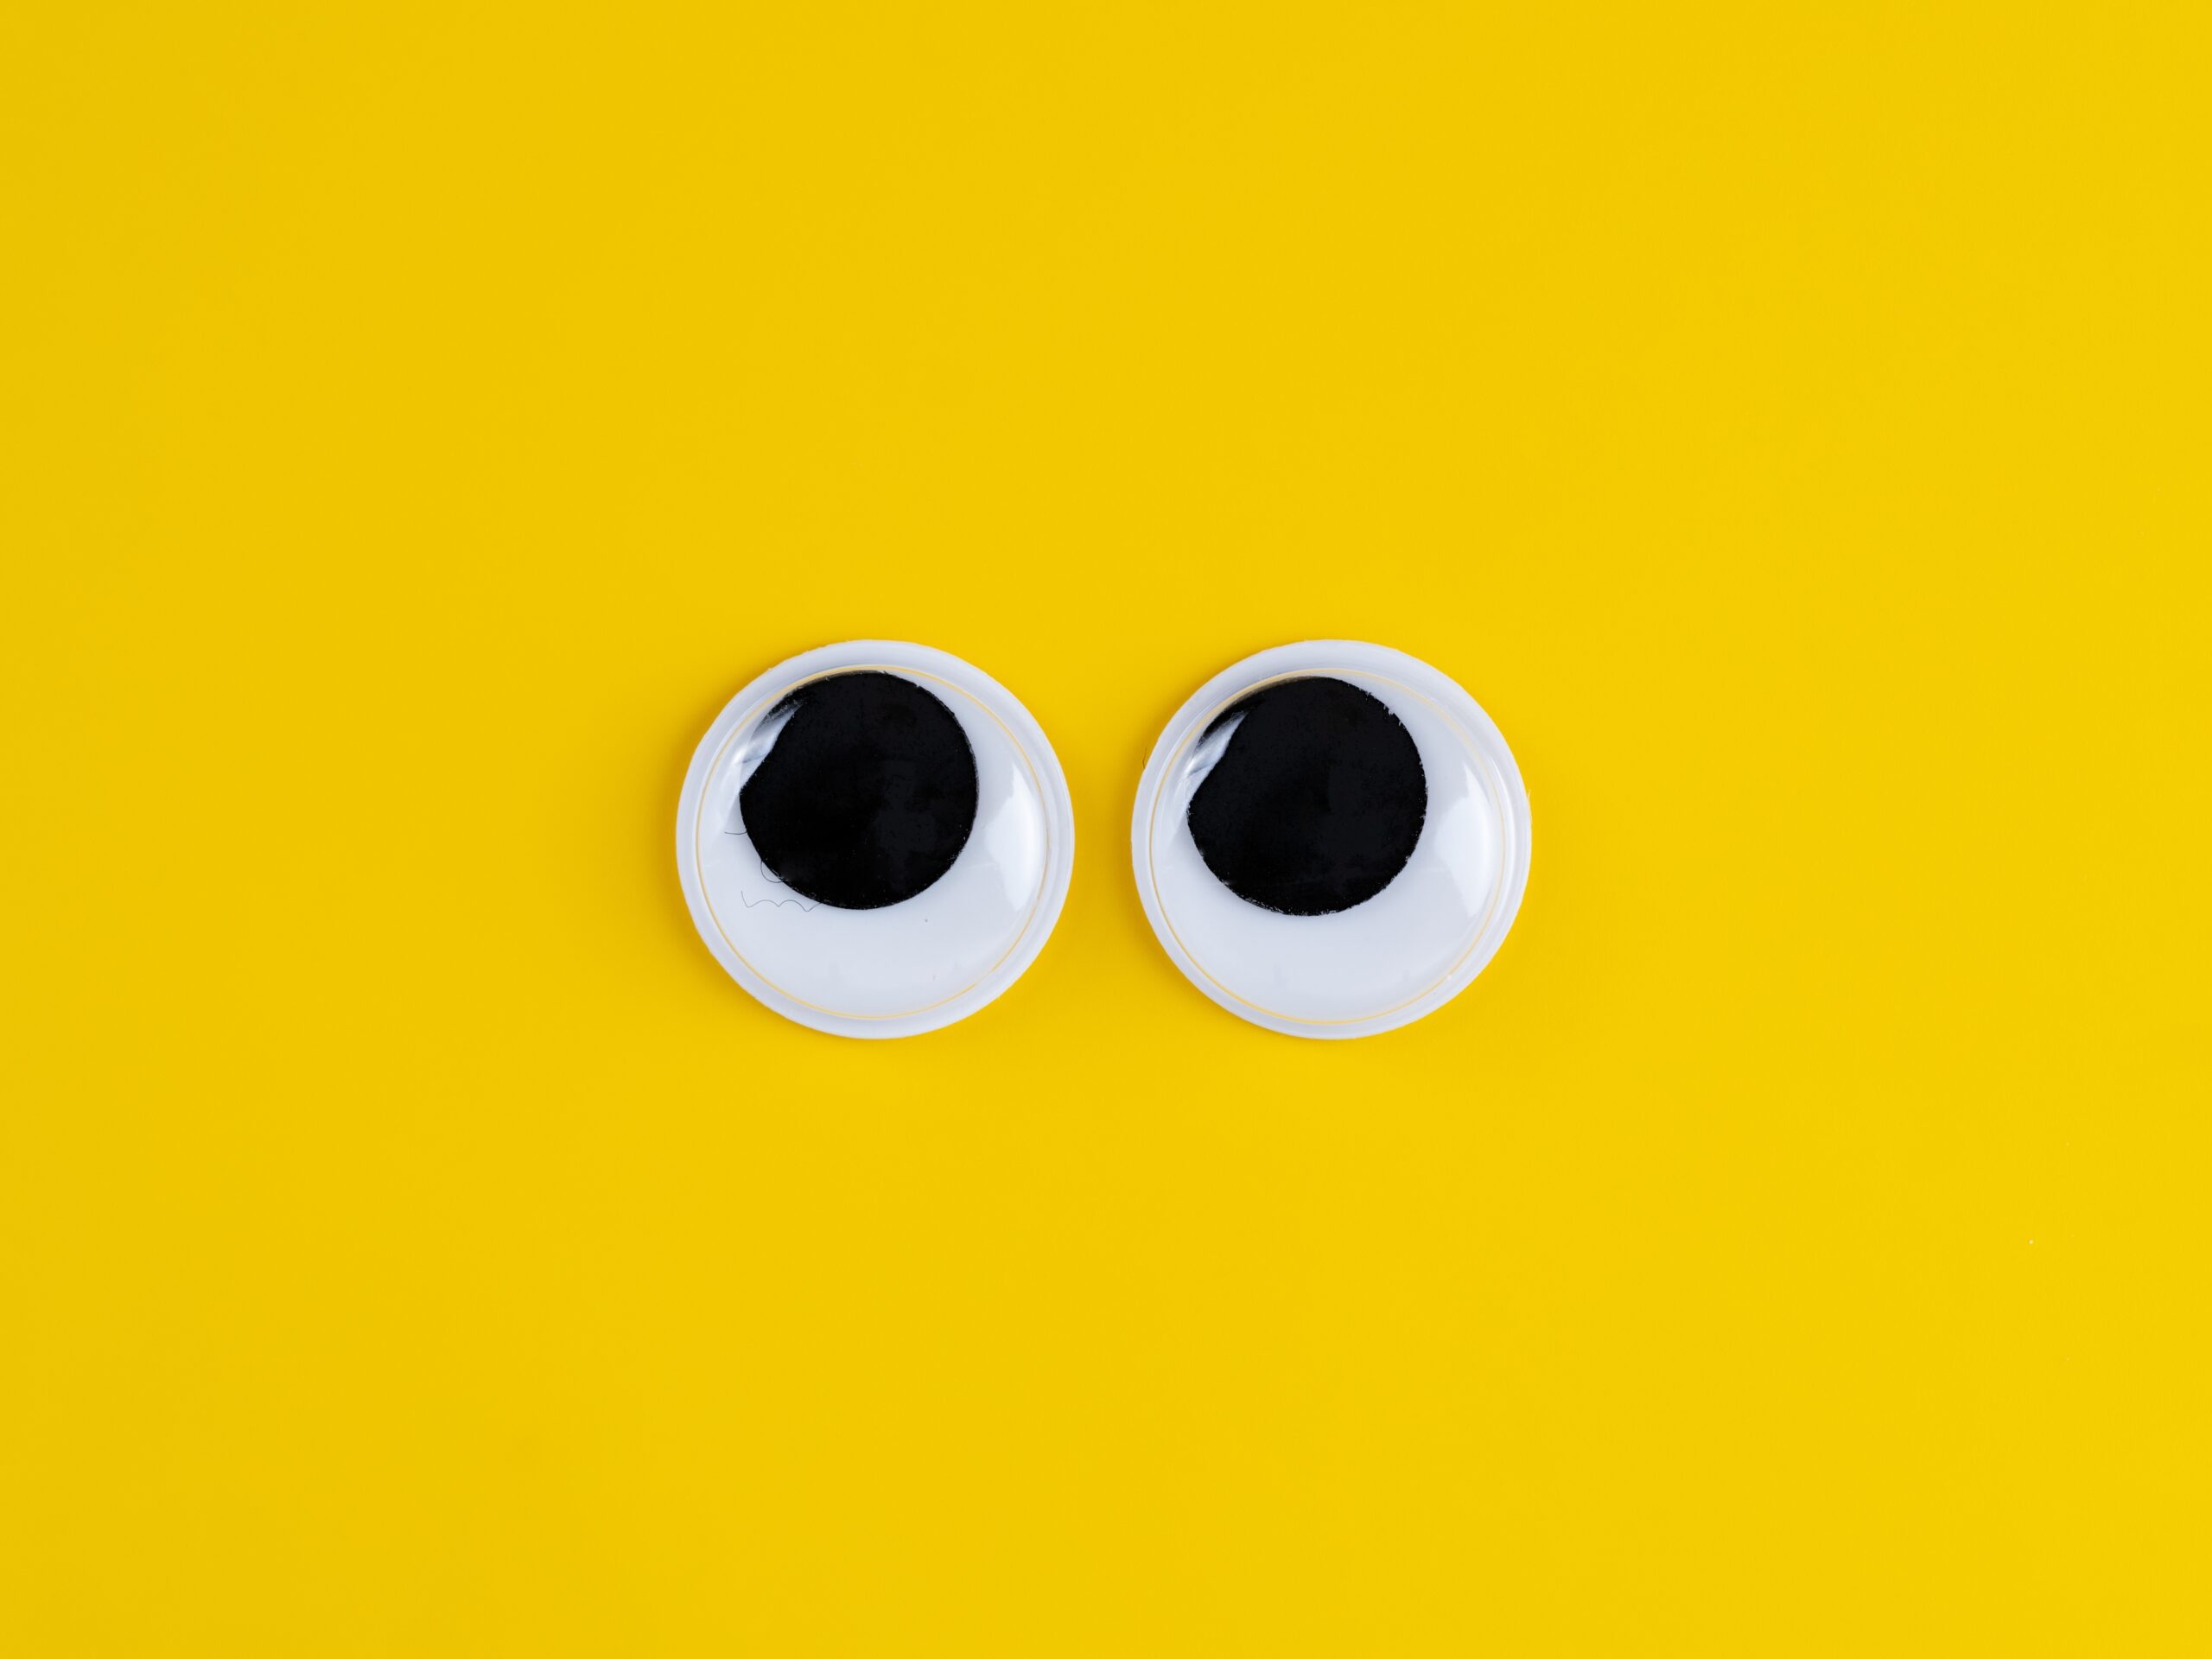 1) “Viral Sensation: Hilarious Googly-Eye Face Mask Takes Social Media by Storm